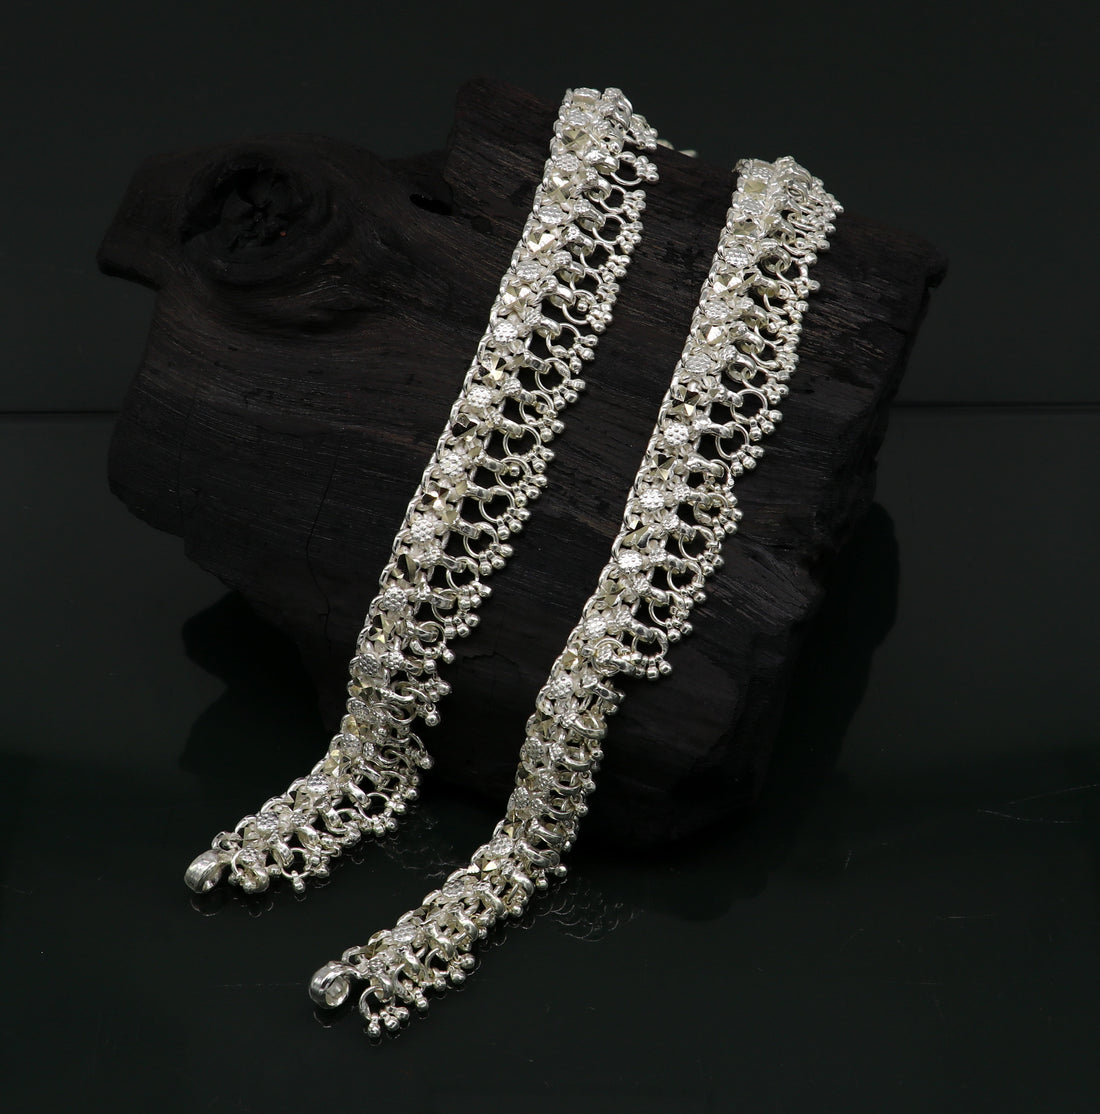 10.5" sterling silver solid customized design ankle bracelet foot bracelet anklet vintage antique design tribal belly dance jewelry ank372 - TRIBAL ORNAMENTS